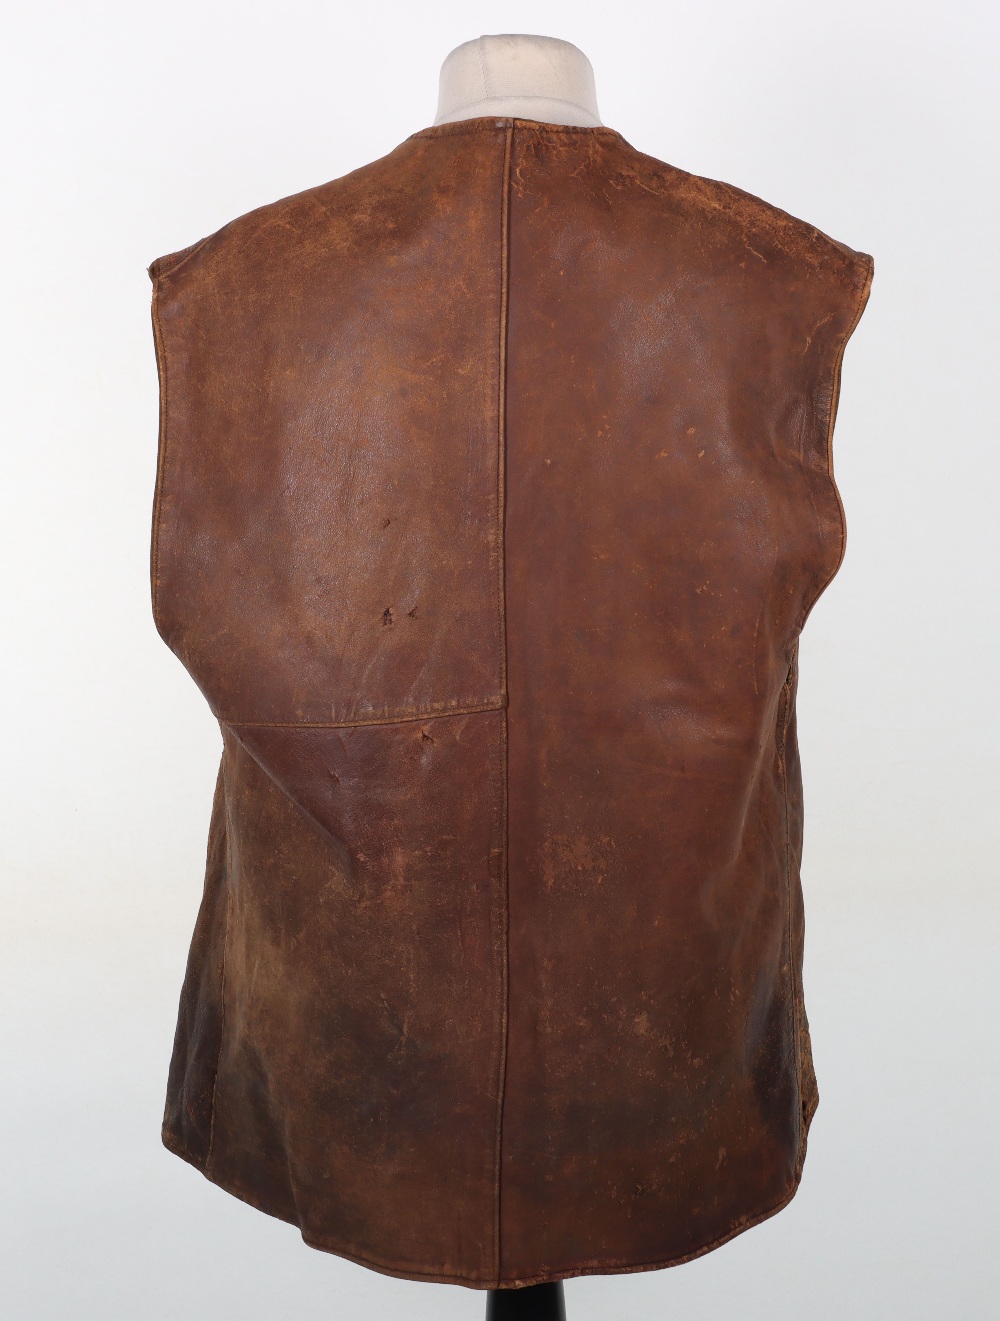 WW2 British Leather Jerkin - Image 4 of 6